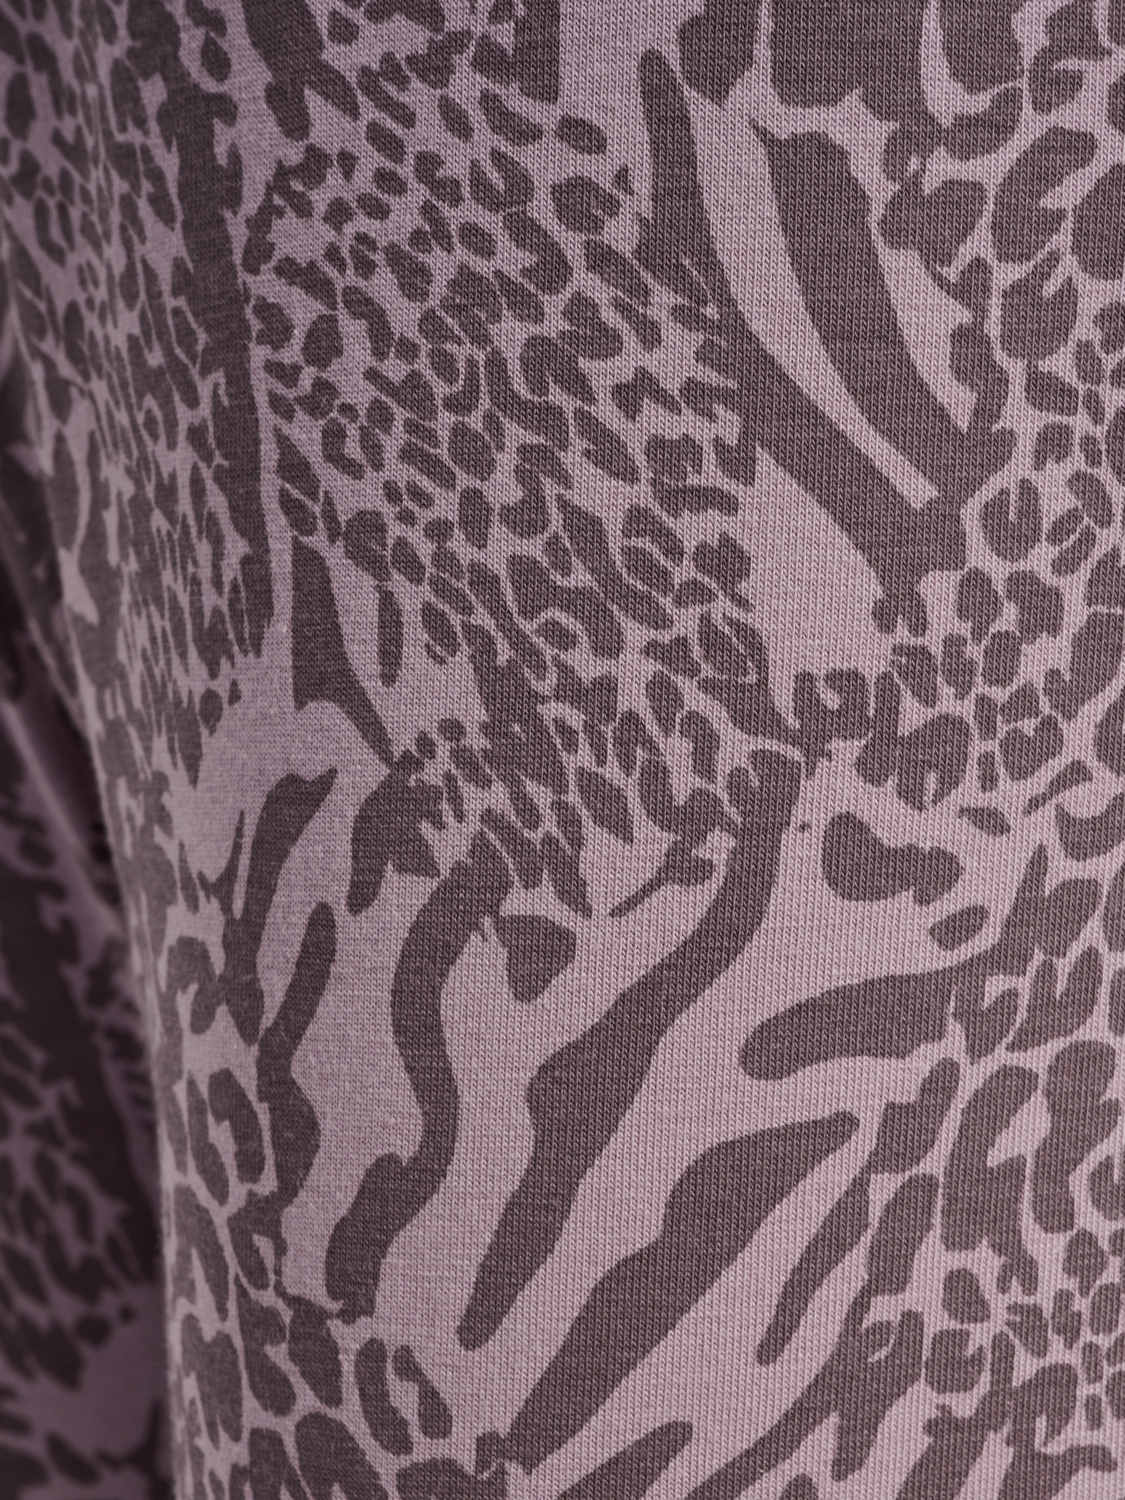 Buy Trending Tiger/Leopard Print Night Suits Shirt & Pyjama Set for Women  (Medium, Leopard Print Short) at Amazon.in